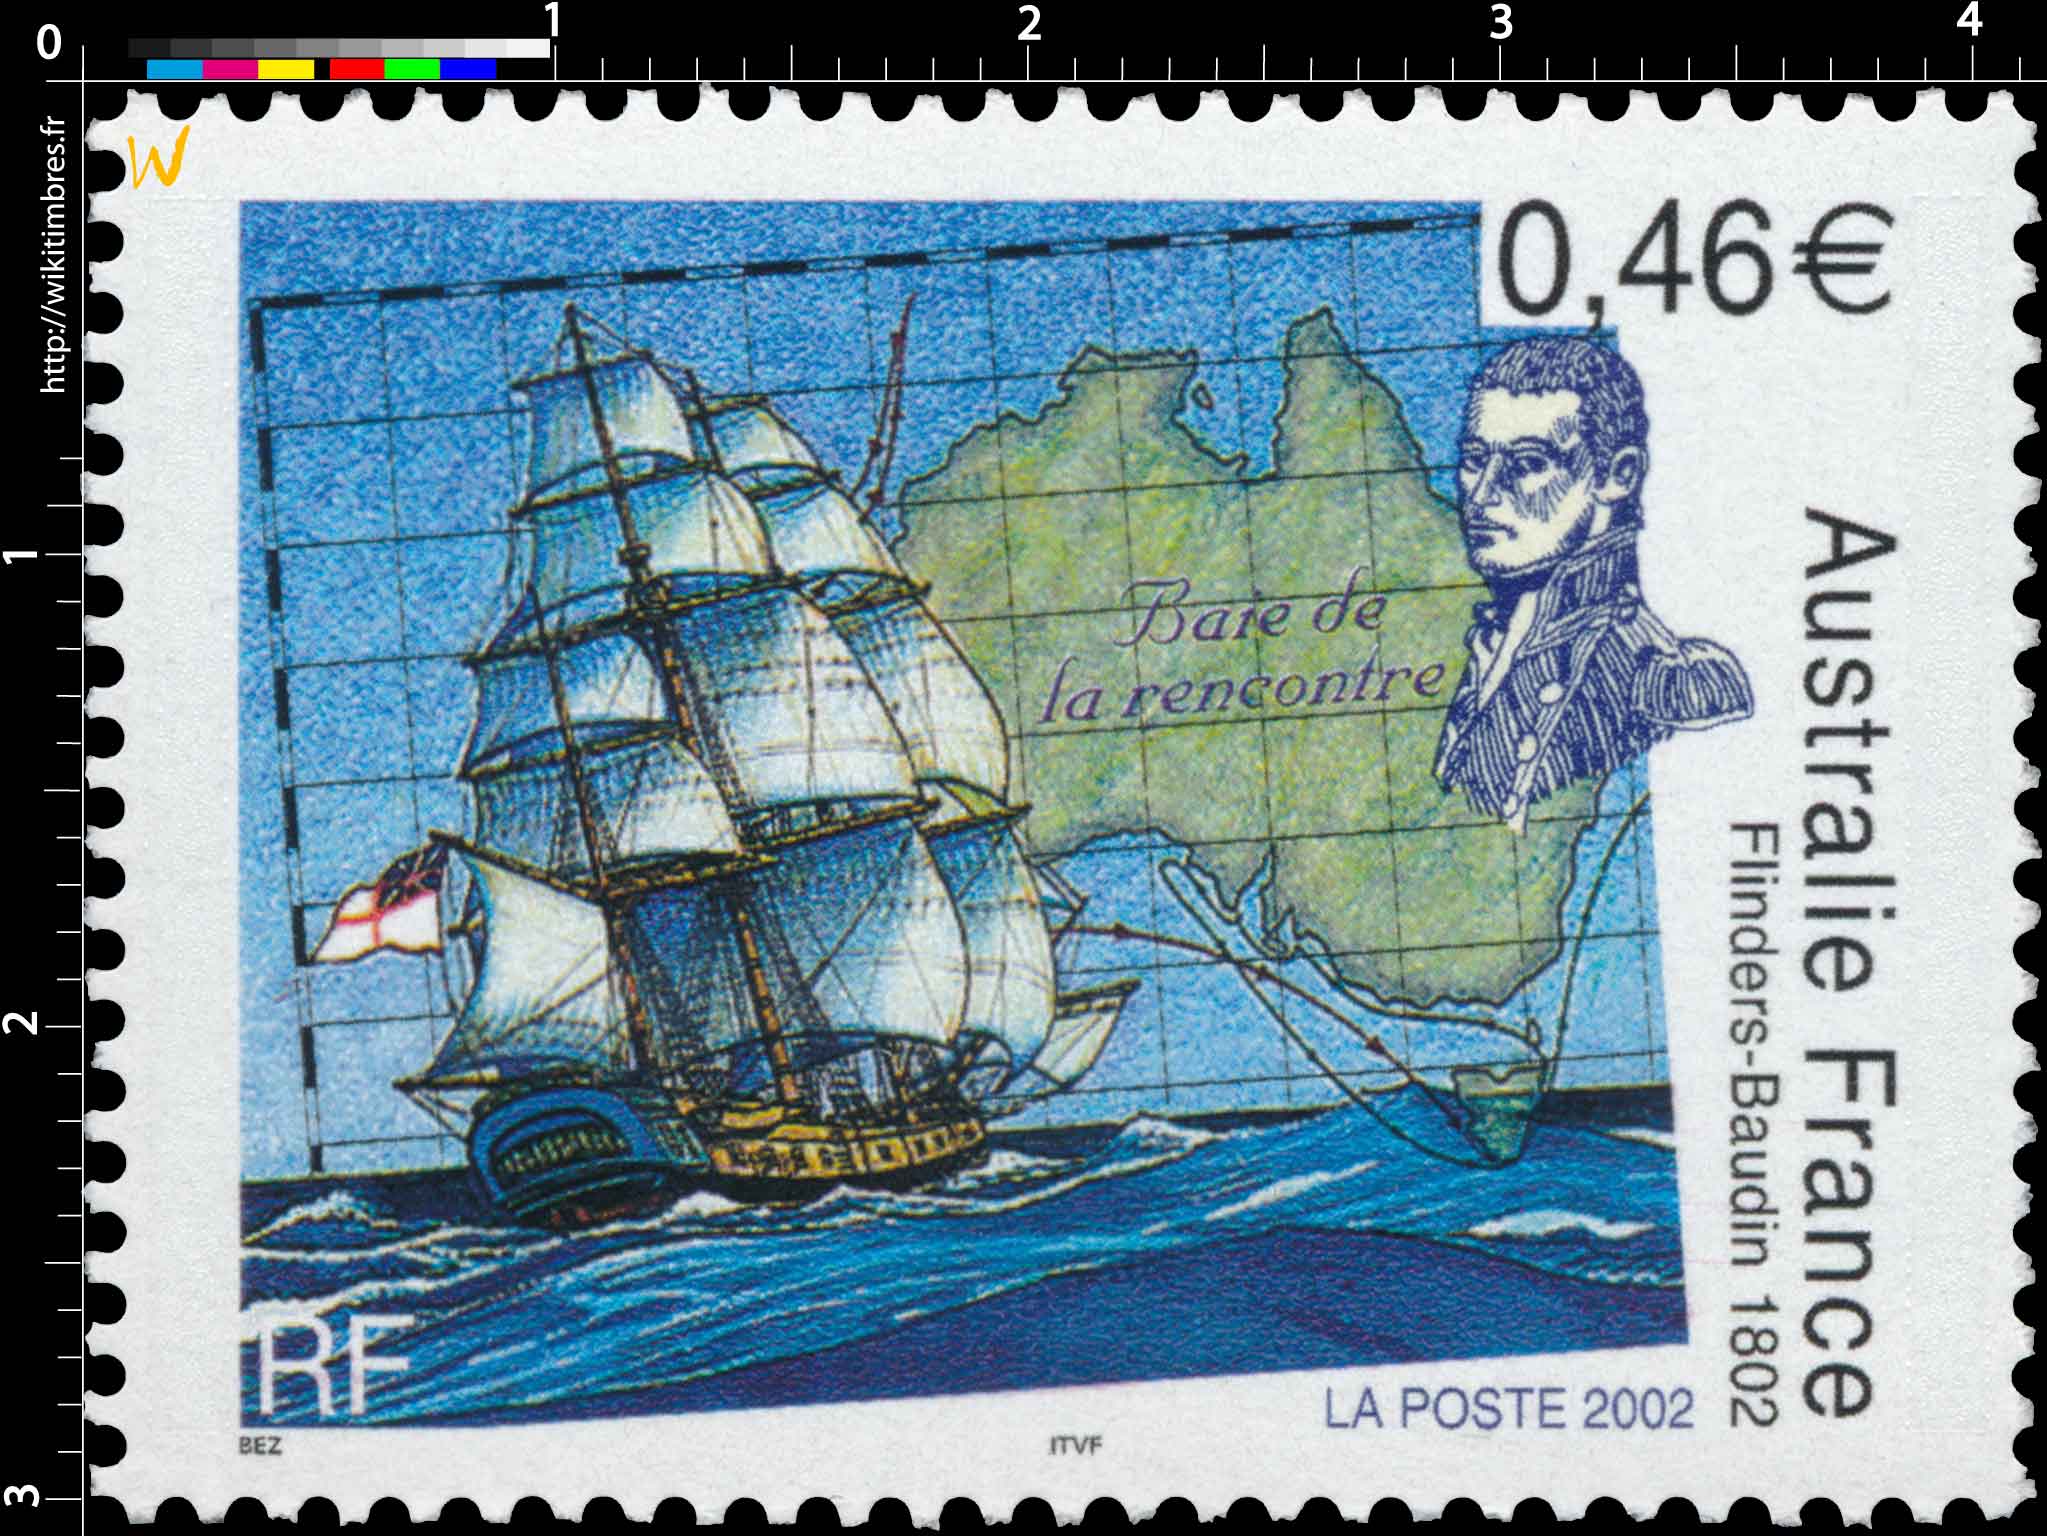 2002 Australie France Flinders-Baudin 1802 Baie de la rencontre